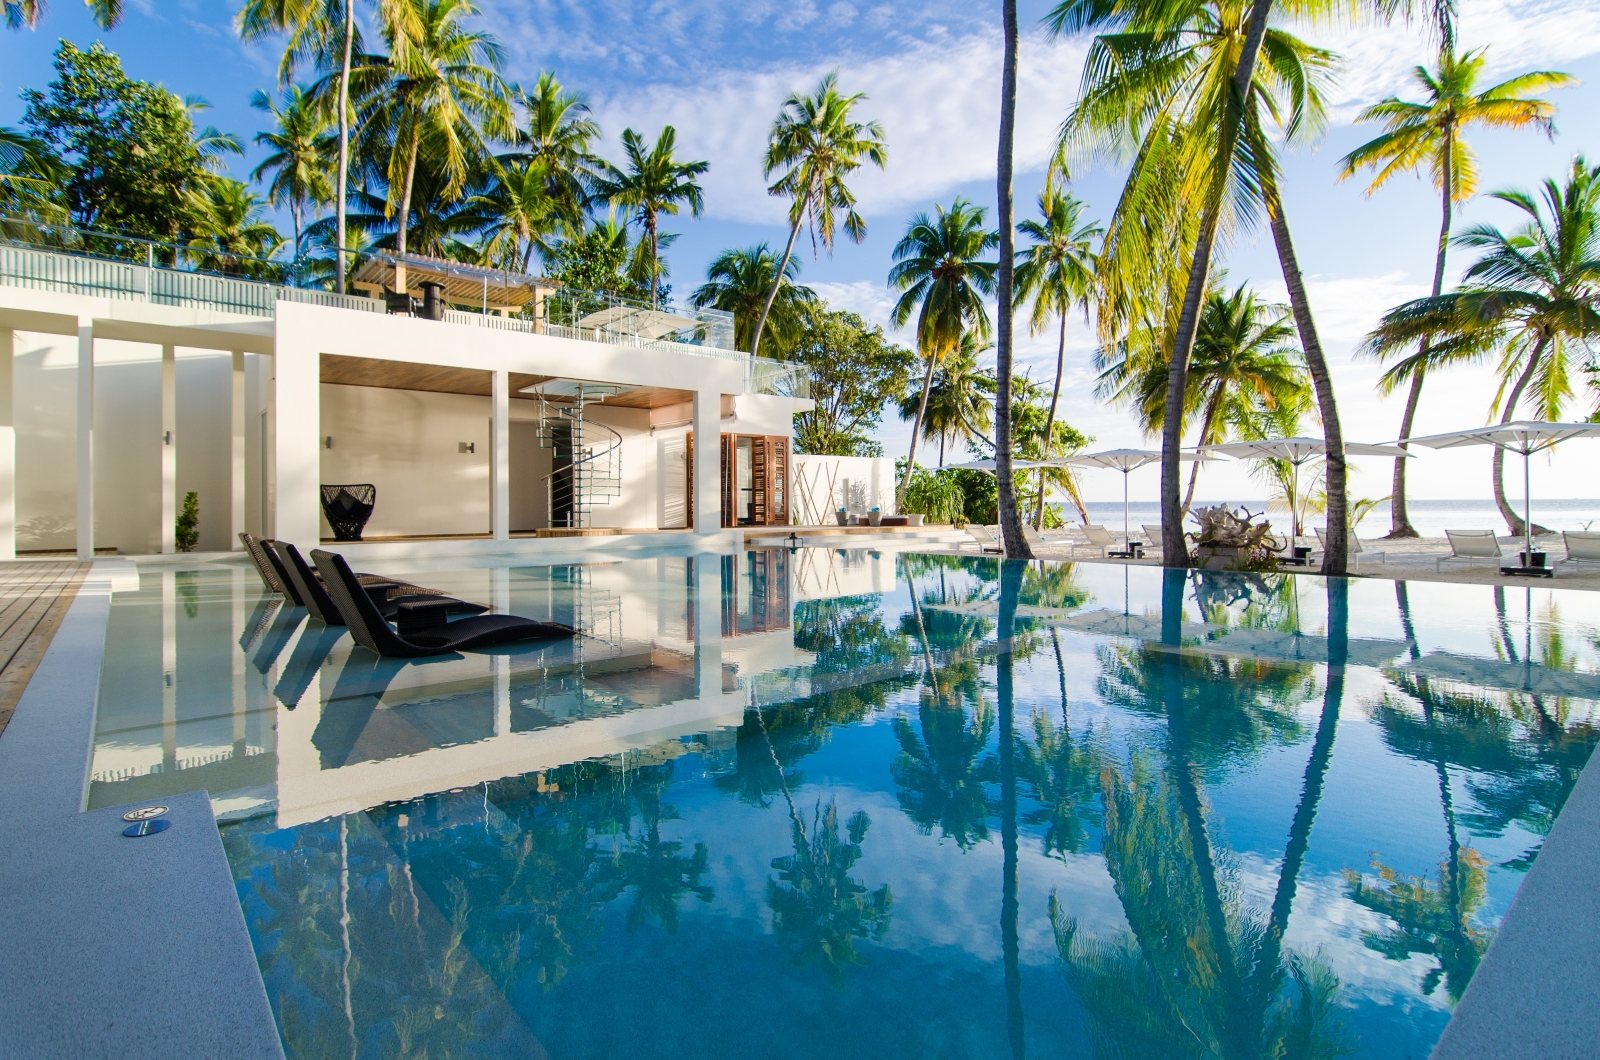 Private pool at The Amilla Estate, six bedroom estate, at luxury resort Amilla in the Maldives